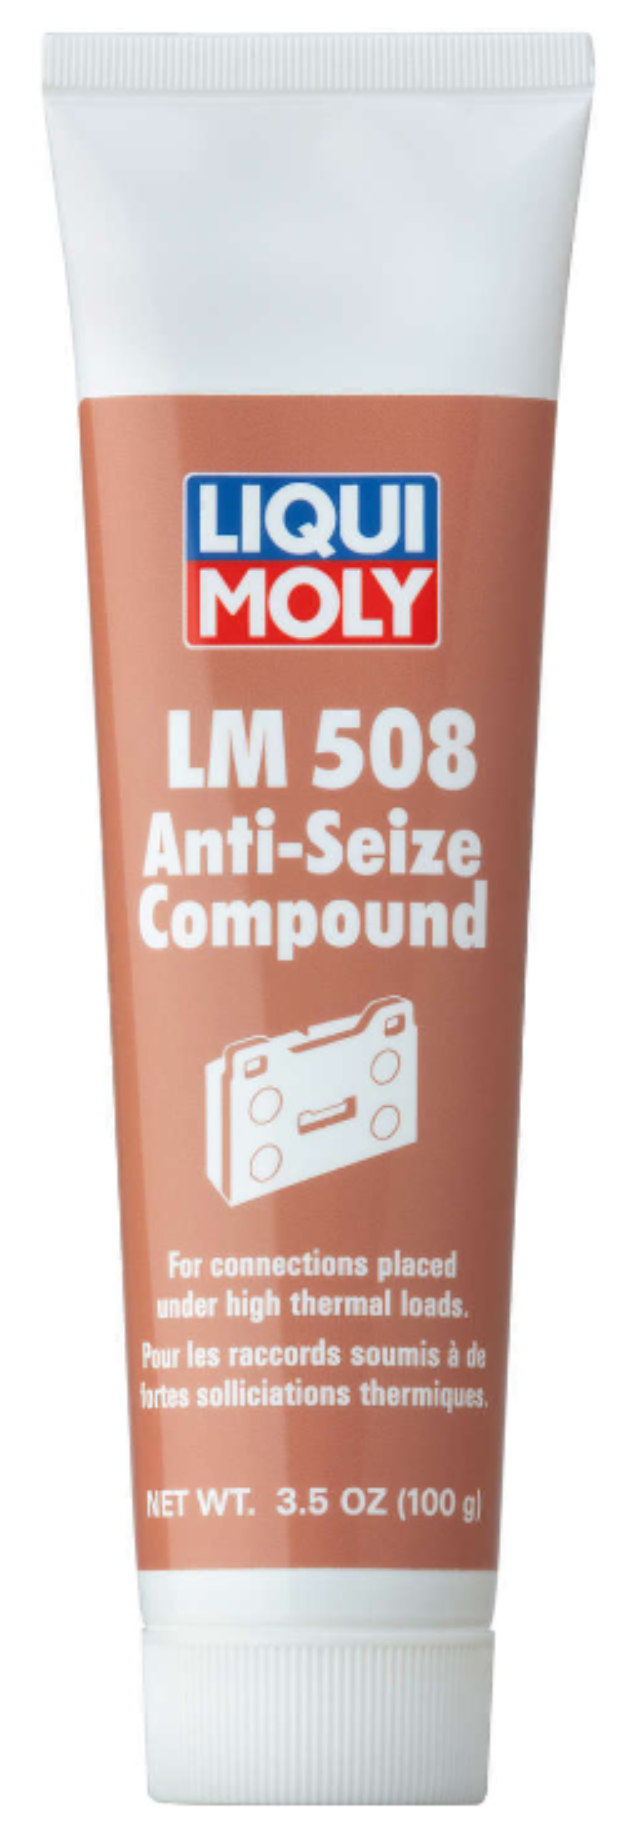 LM 508 Anti-Seize Compound (100g Tube)- Liqui Moly LM2012